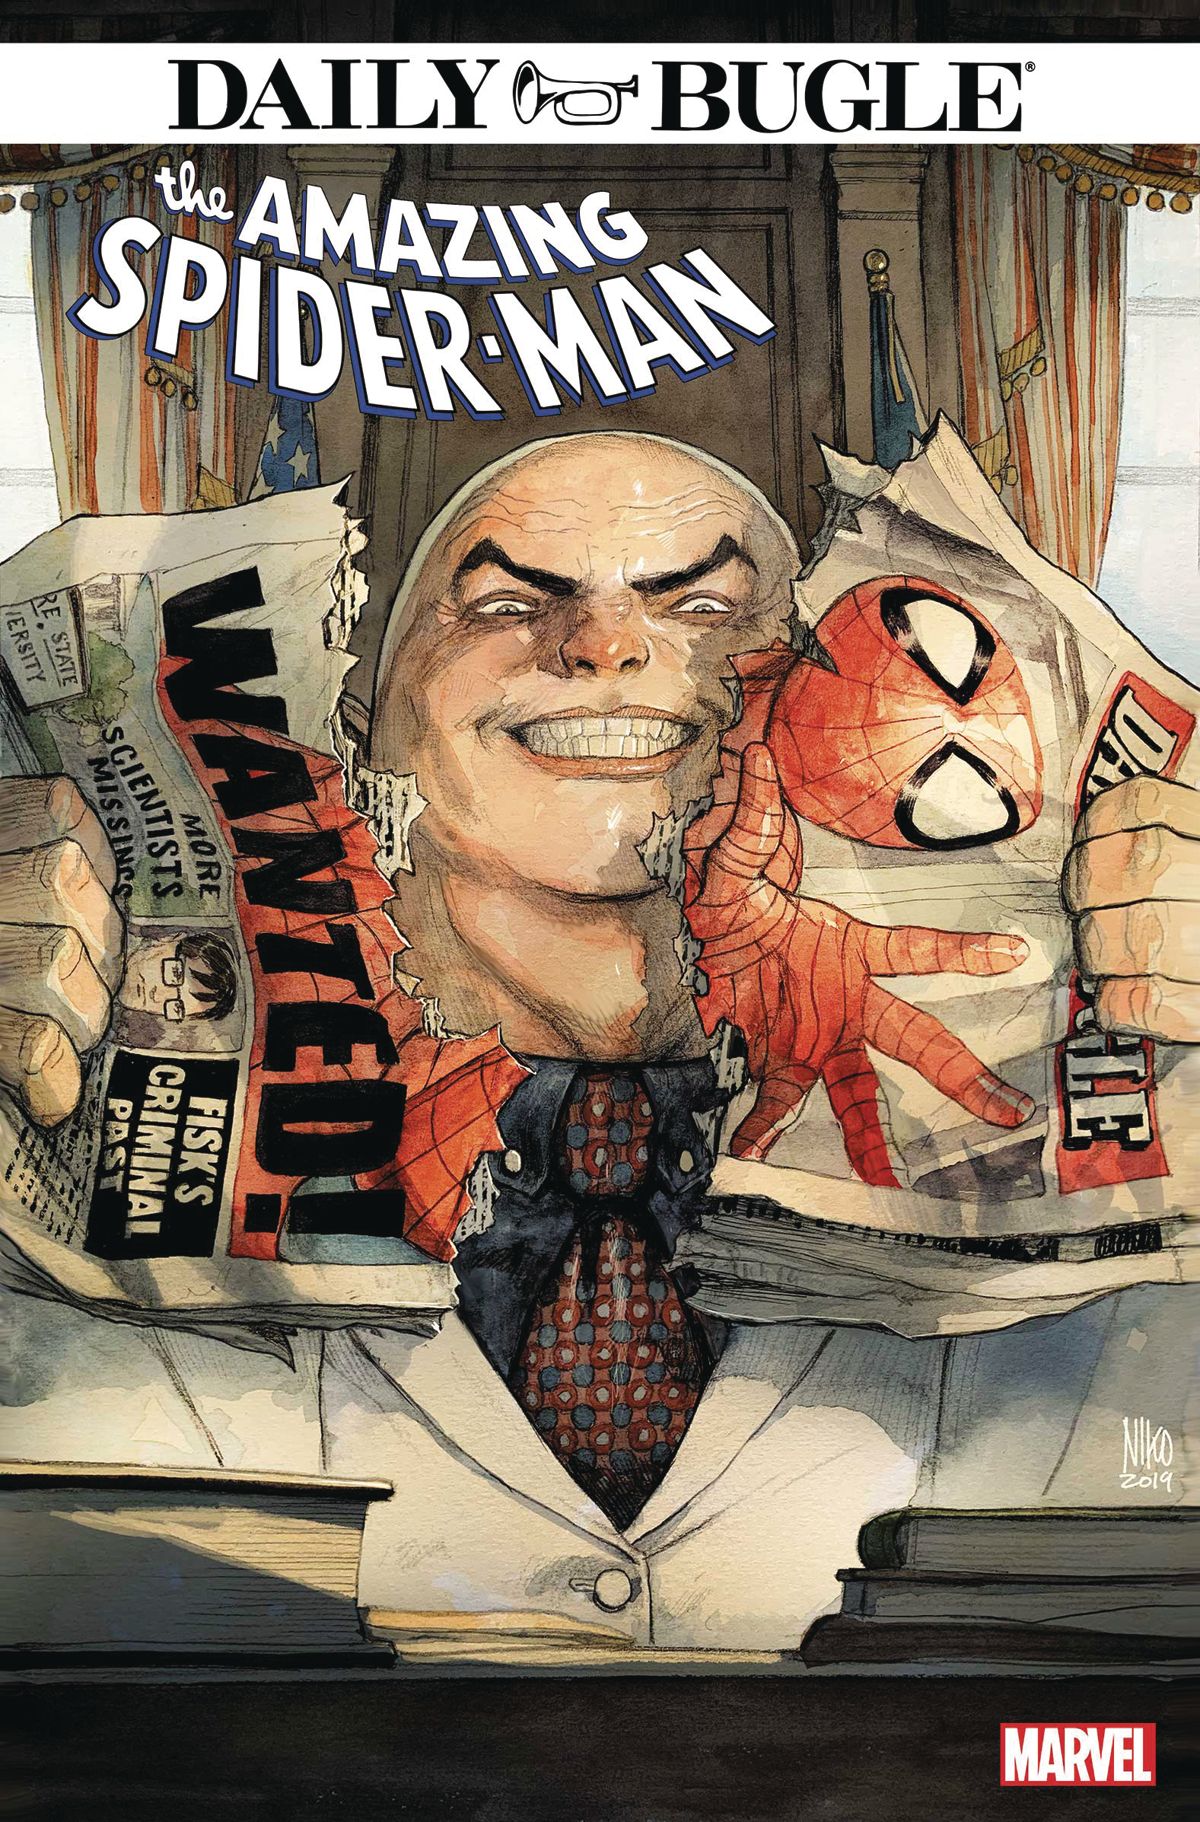 Amazing Spider-Man: Daily Bugle #3 Comic